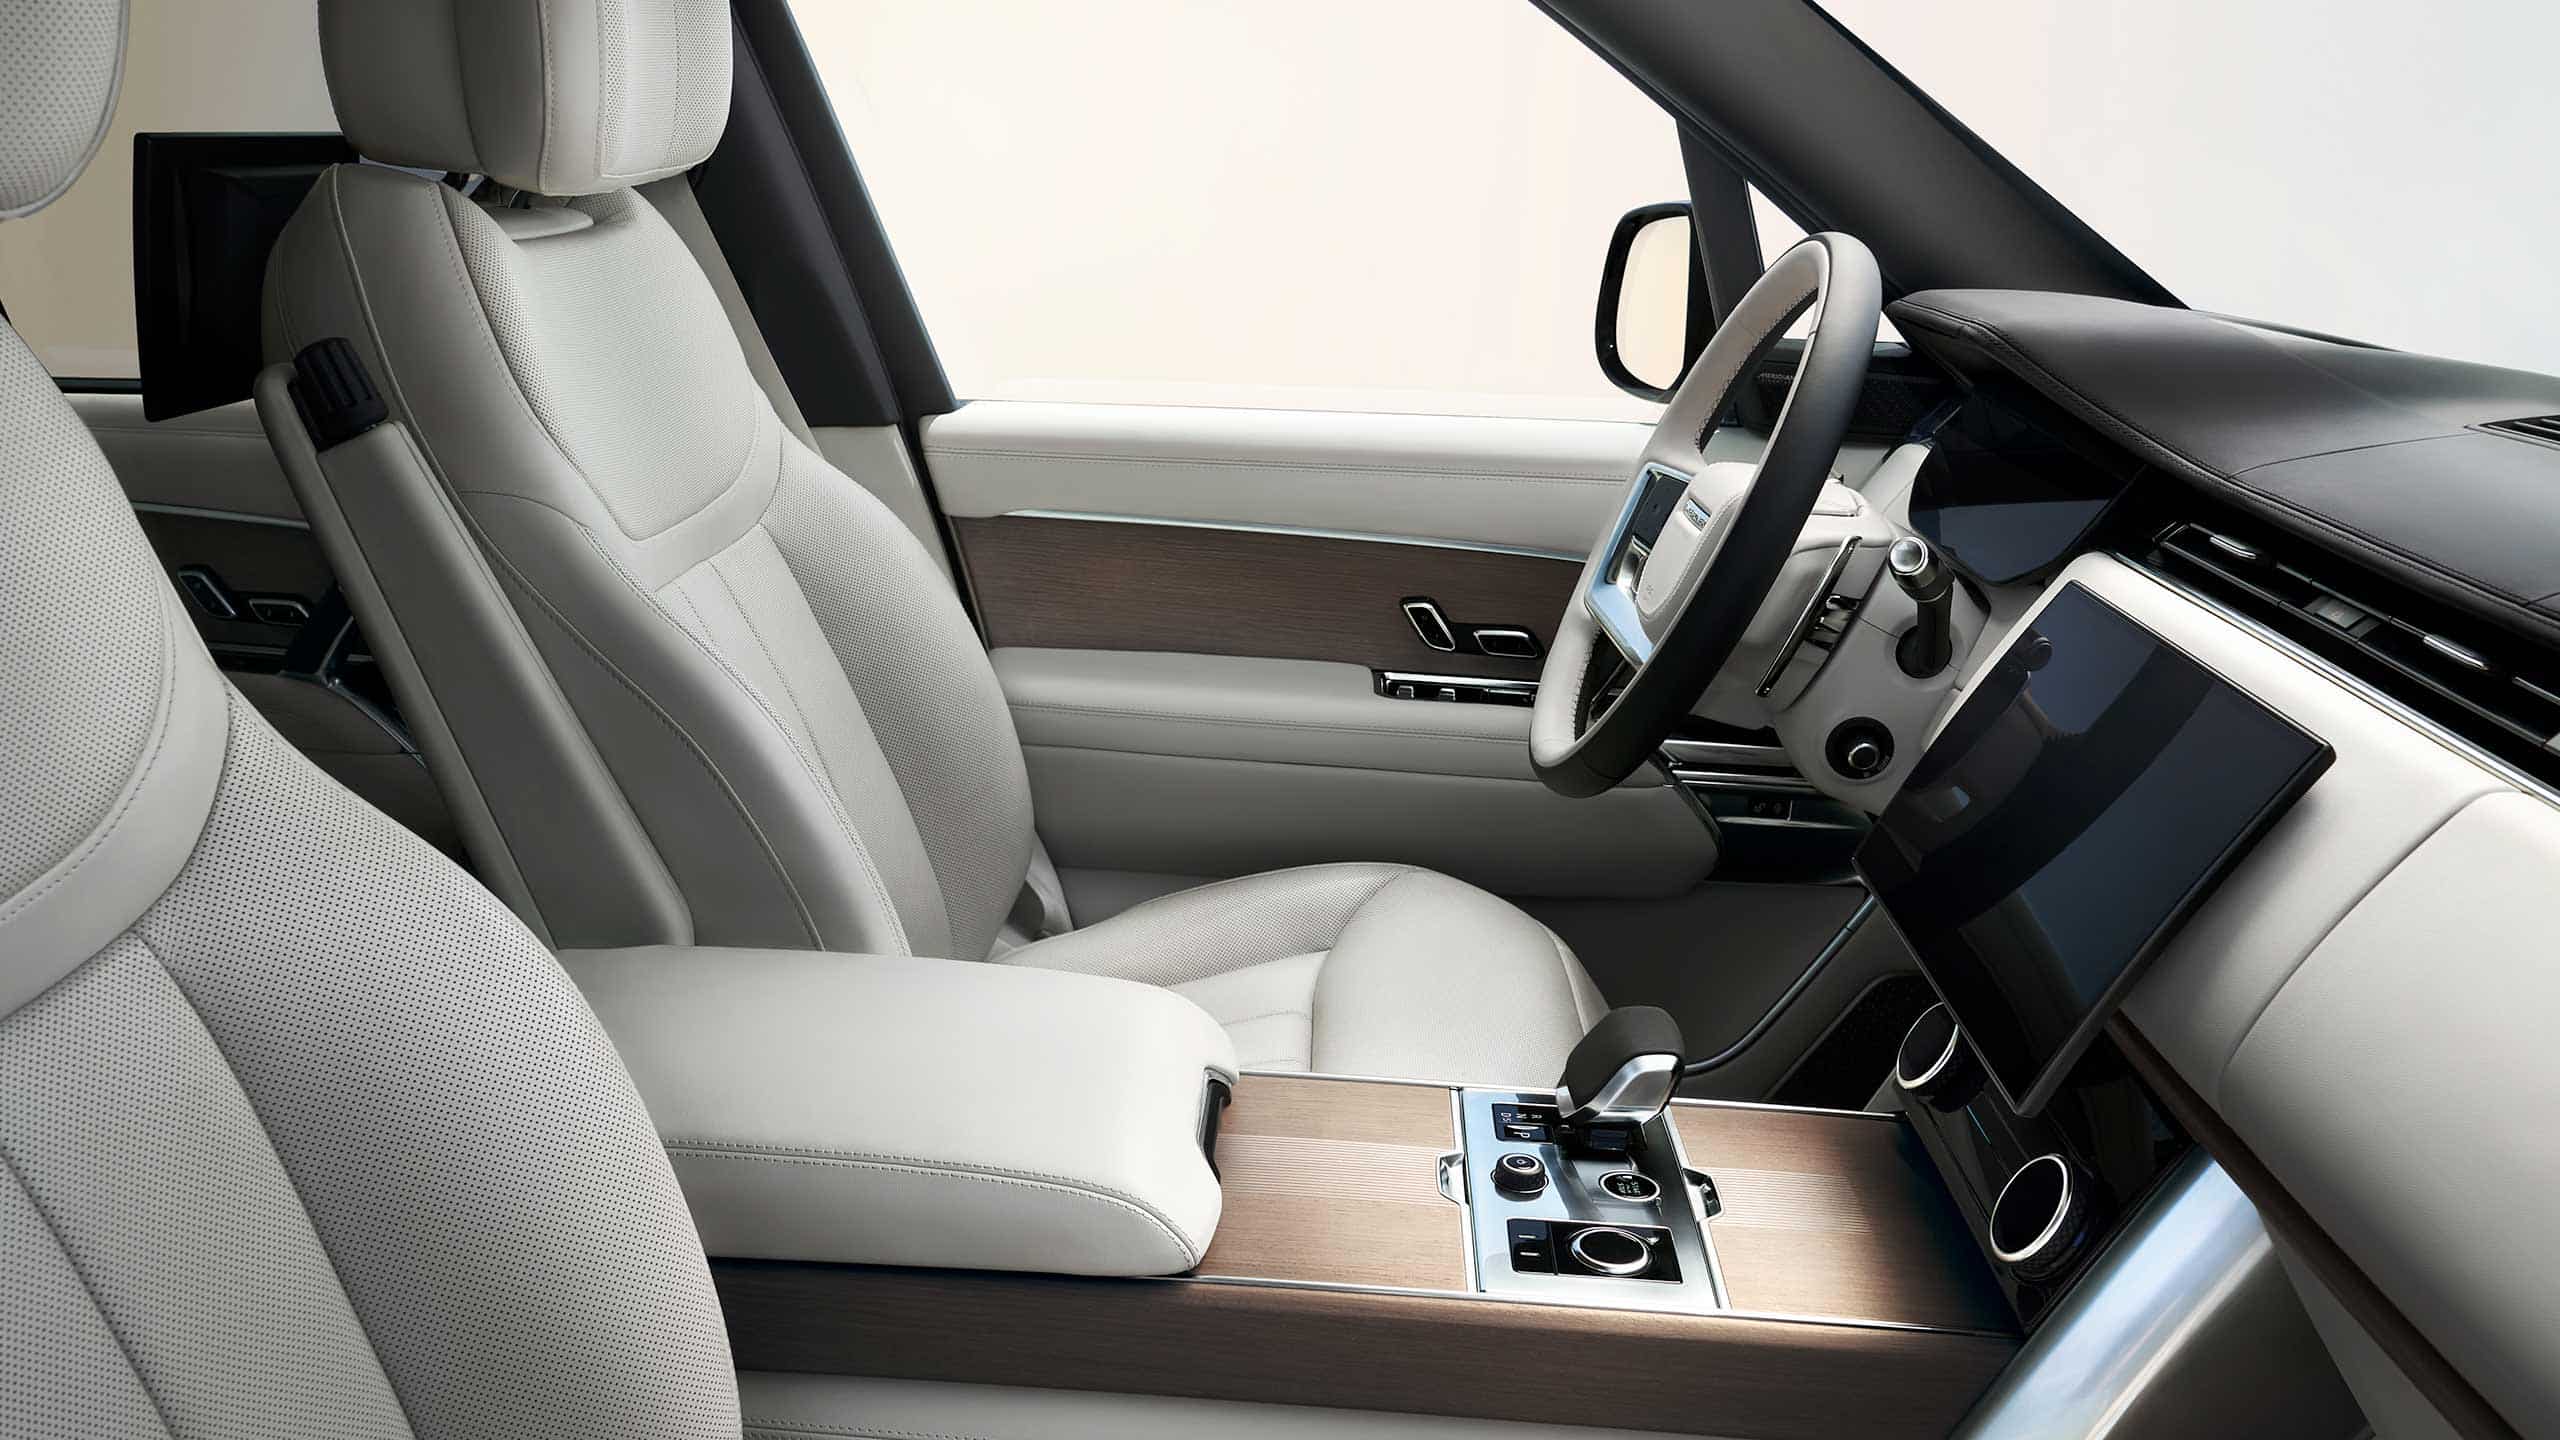 New Range Rover interior front seats